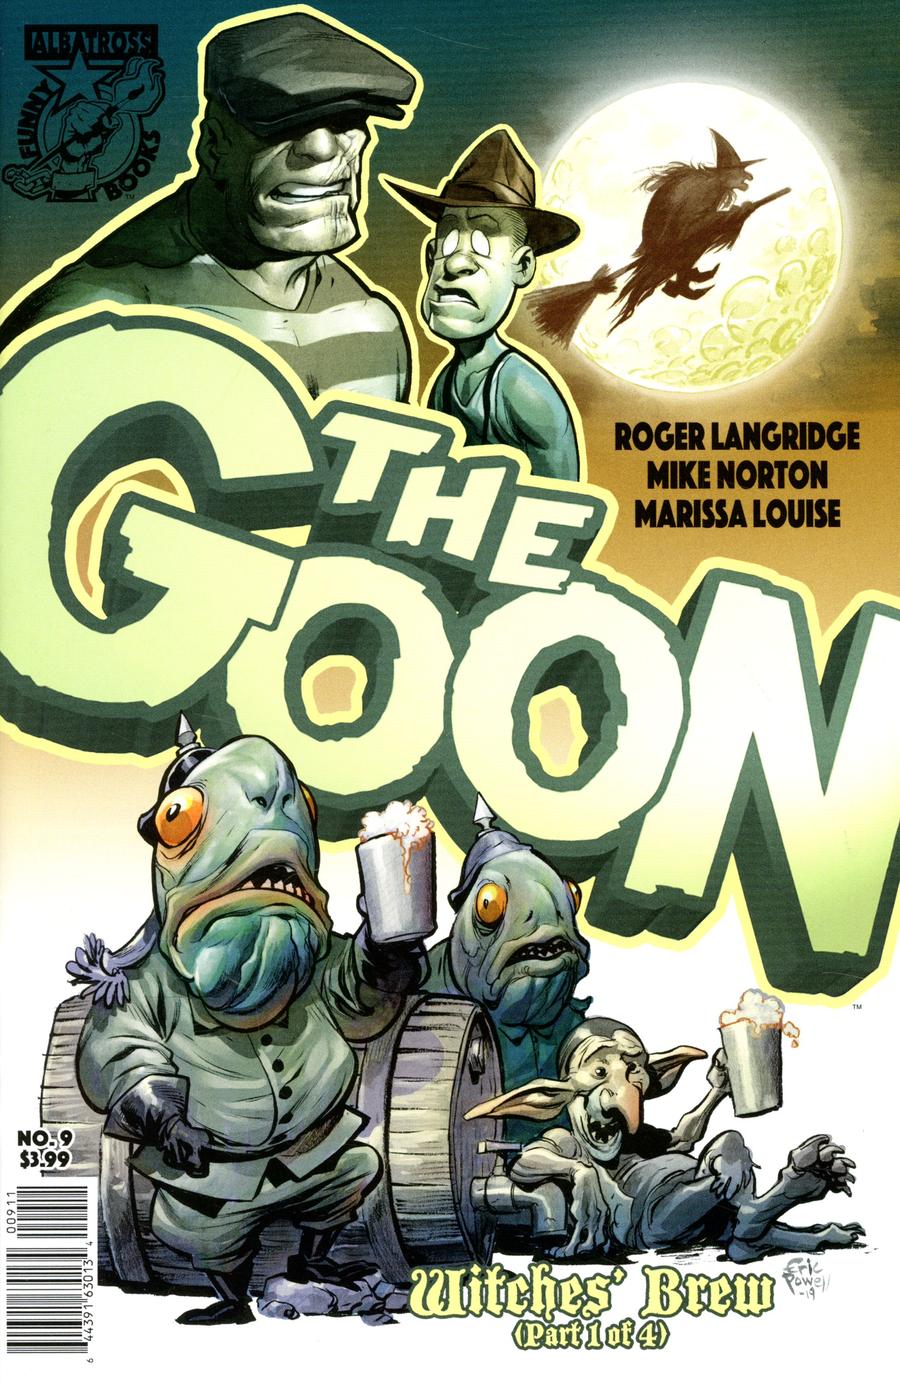 Goon Vol 4 #9 Cover A Regular Eric Powell Cover